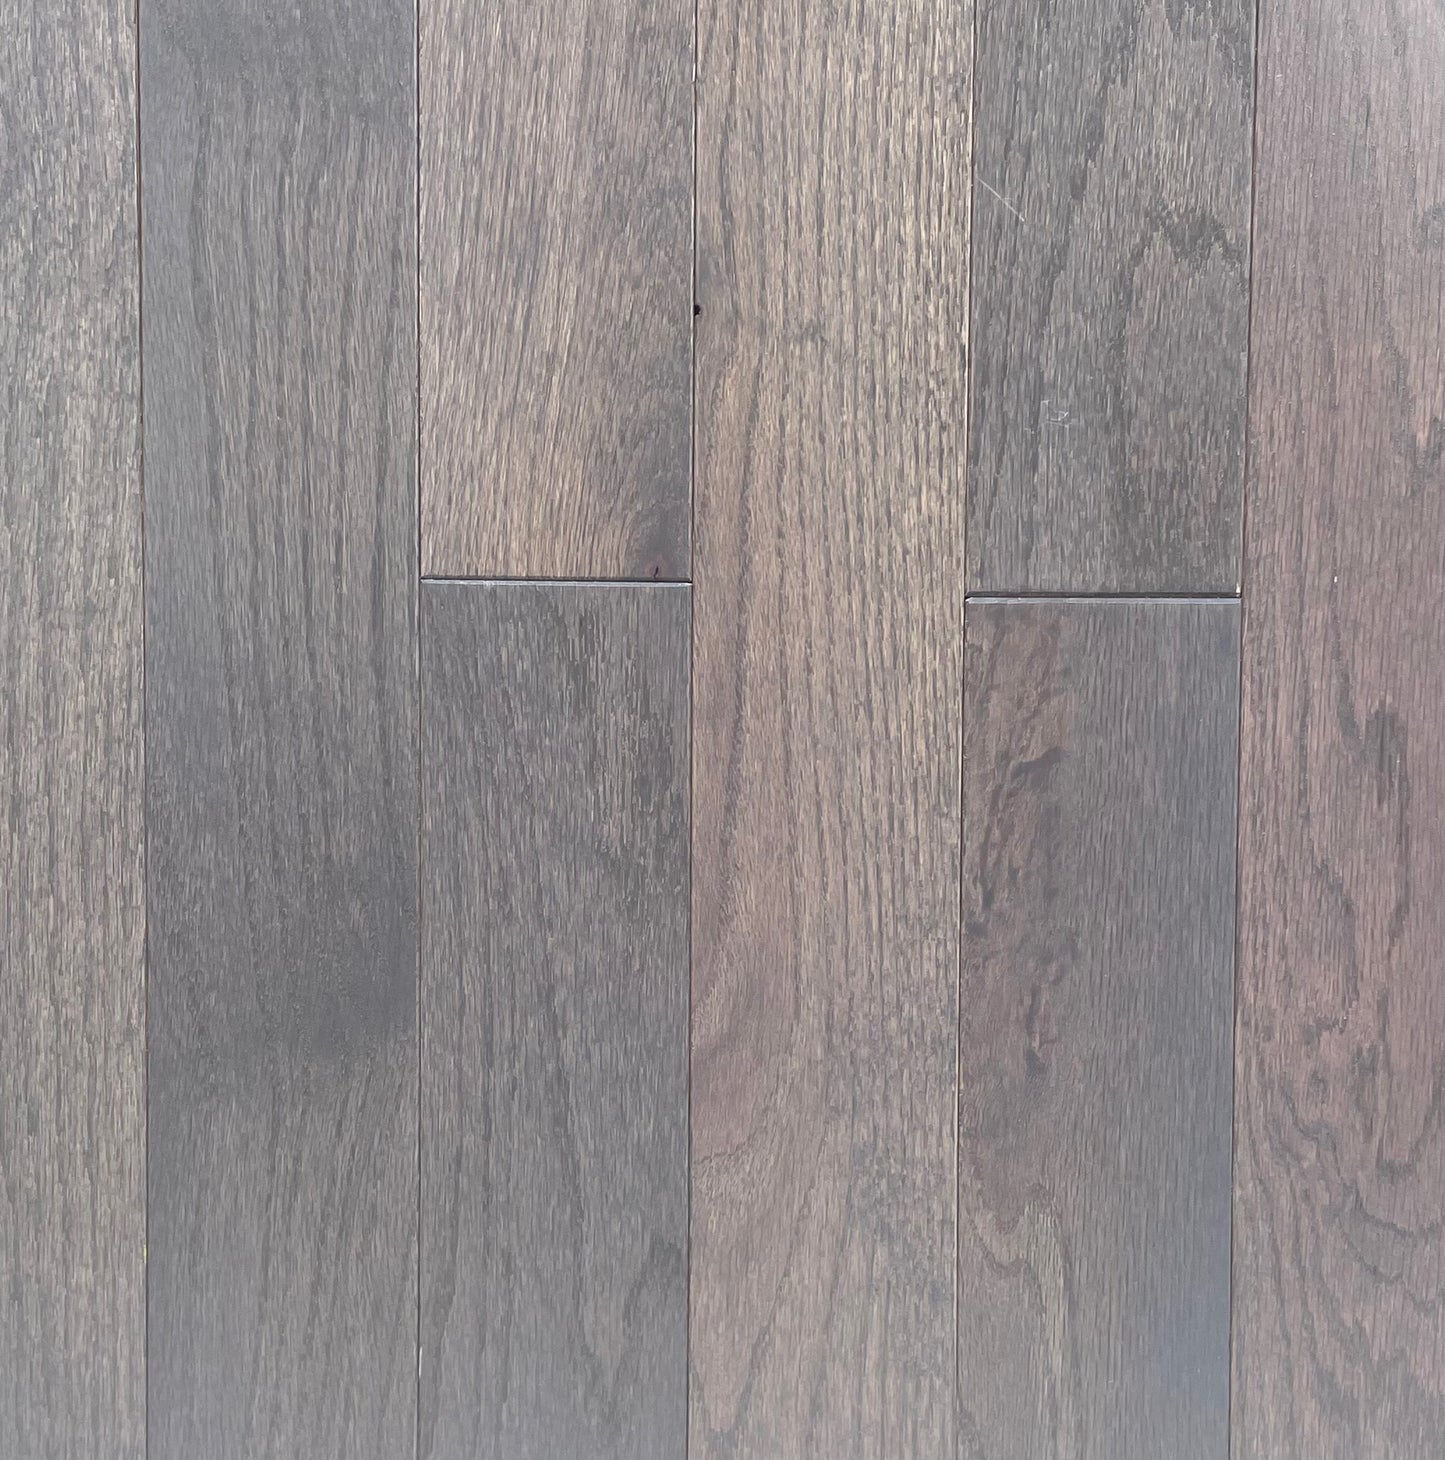 3 1/4 x 3/4 Solid Oak Sunray Stain Prefinished Hardwood Flooring